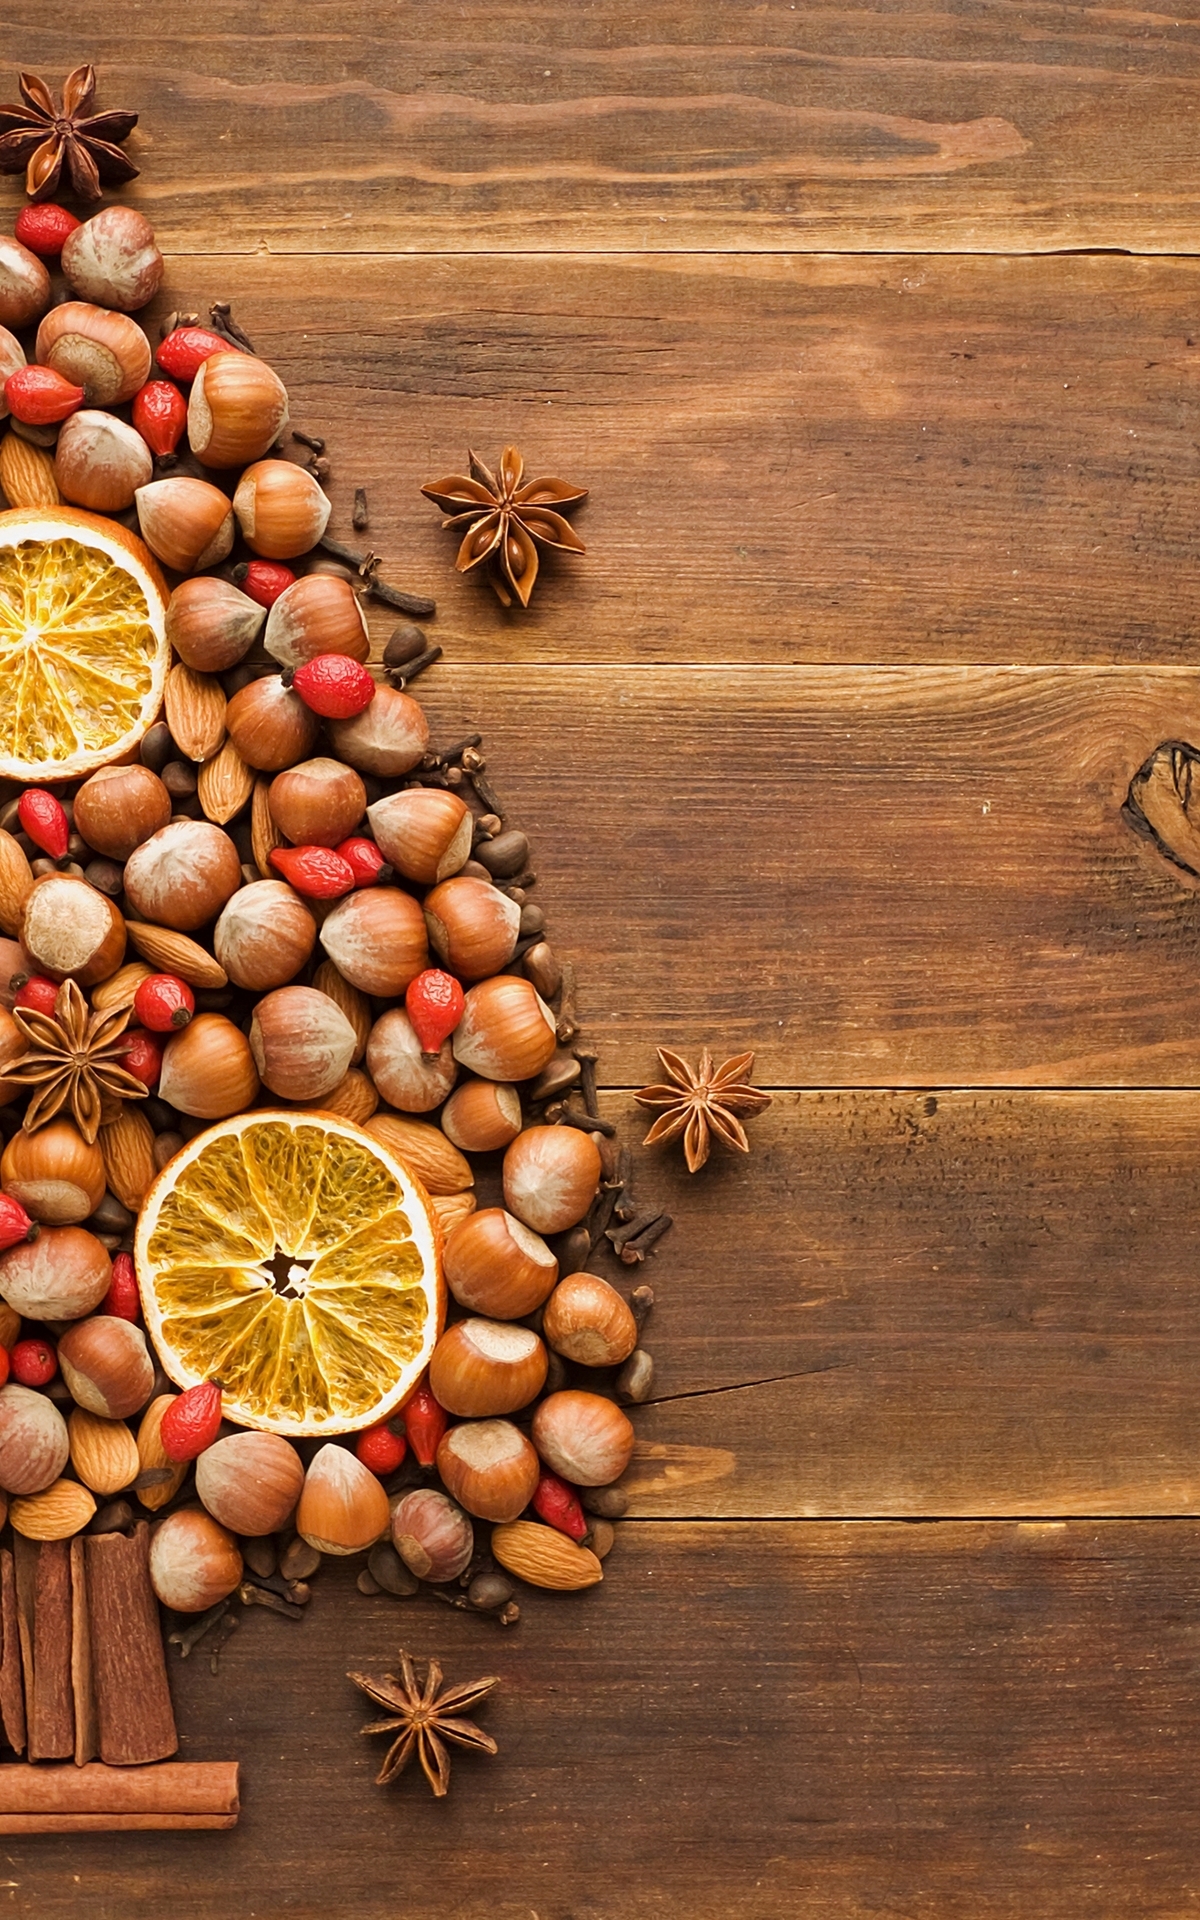 Image: Fir-tree, walnuts, hazelnuts, almond, orange, rosehip, cloves, spices